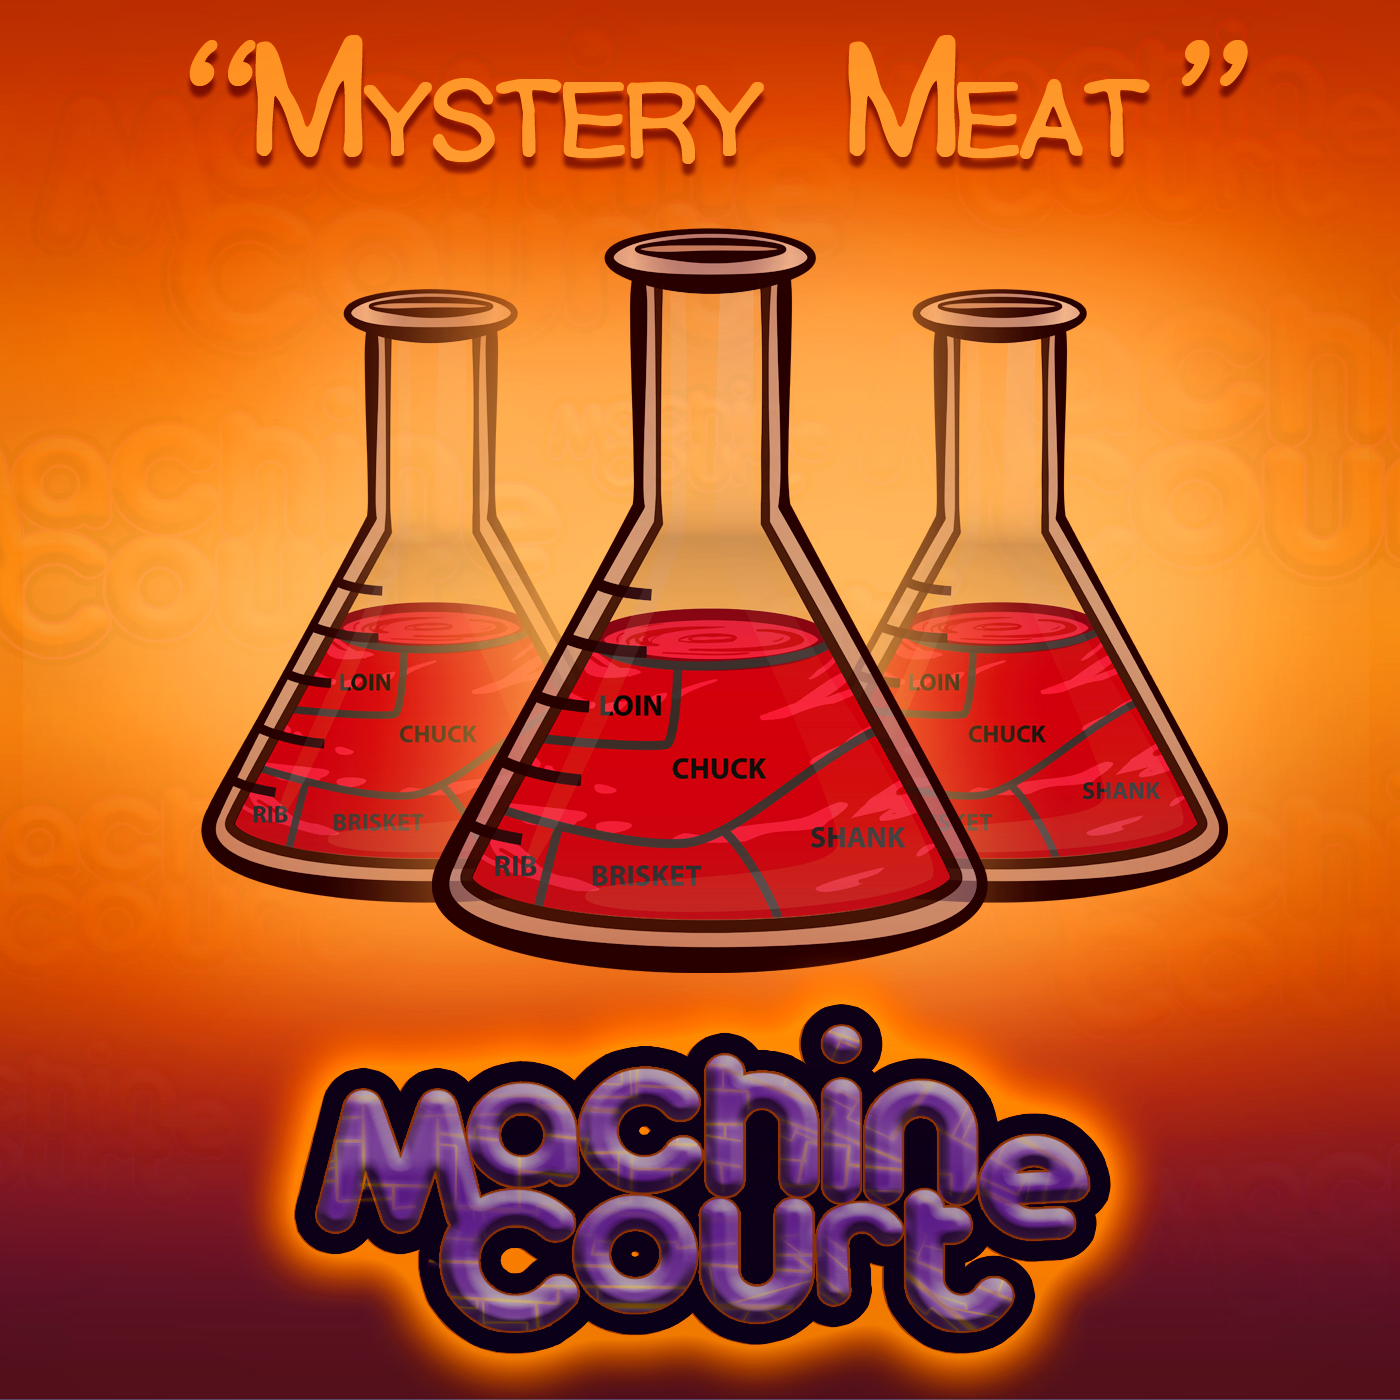 1.8 “Mystery Meat”